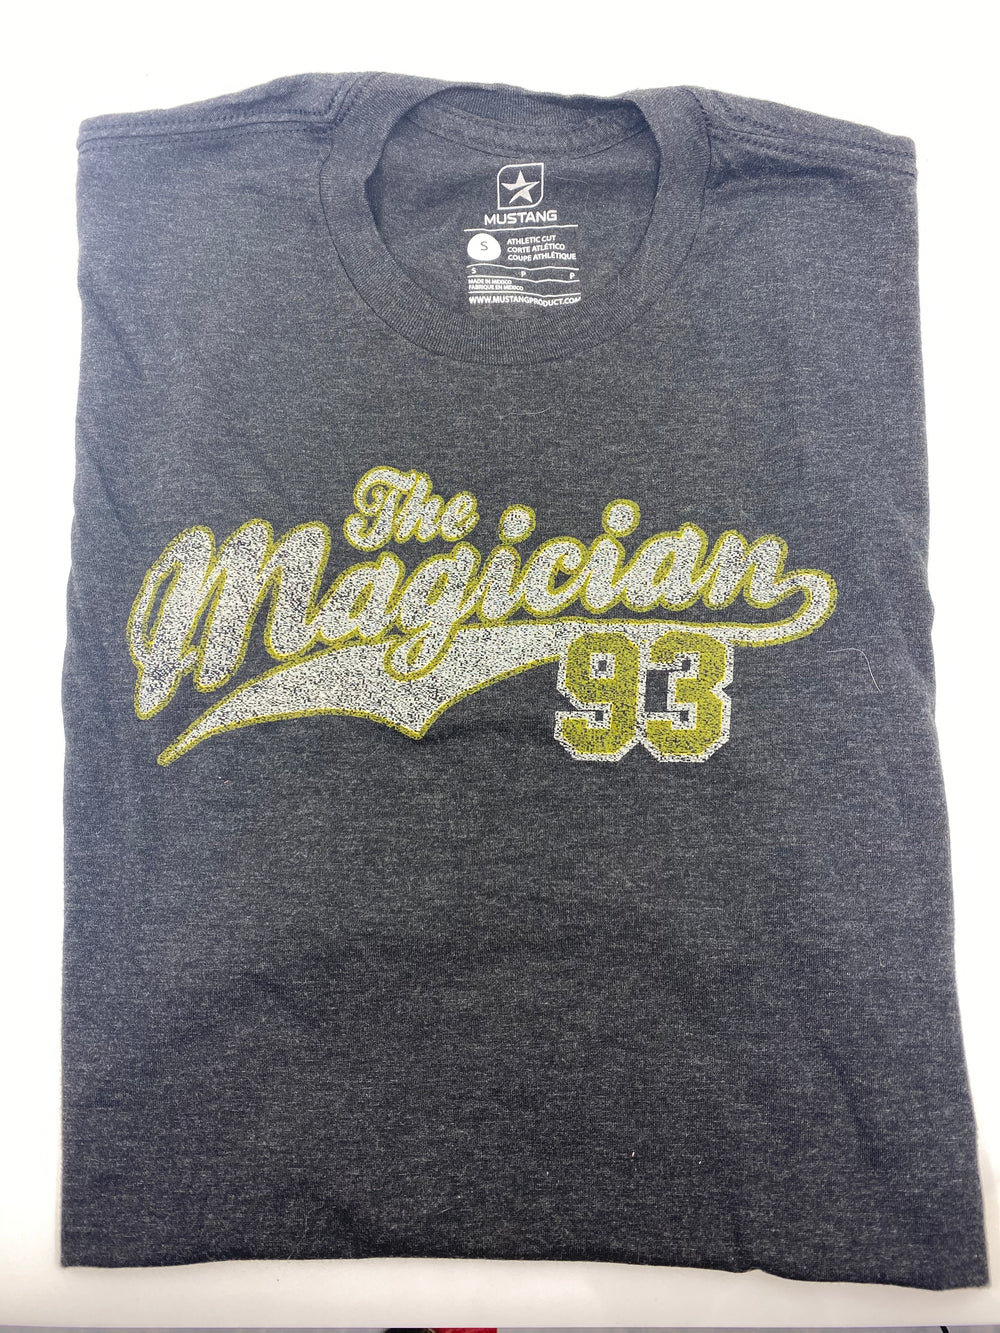 Marner "The Magician 93" T shirt Black